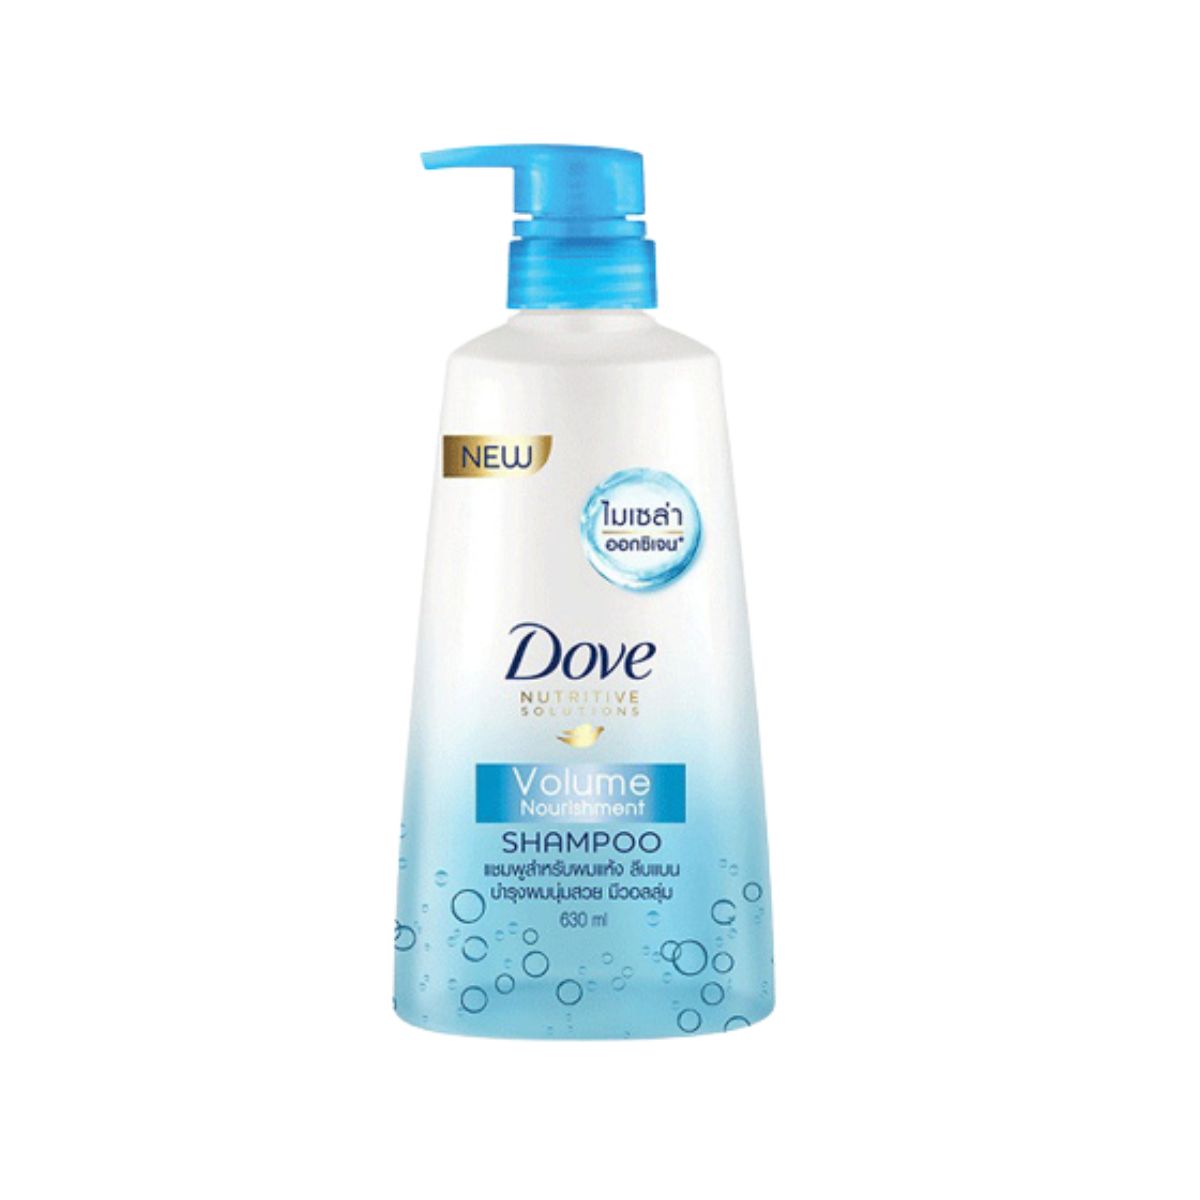 Dove Nutritive Solutions Volume Nourishment Shampoo - 450ml